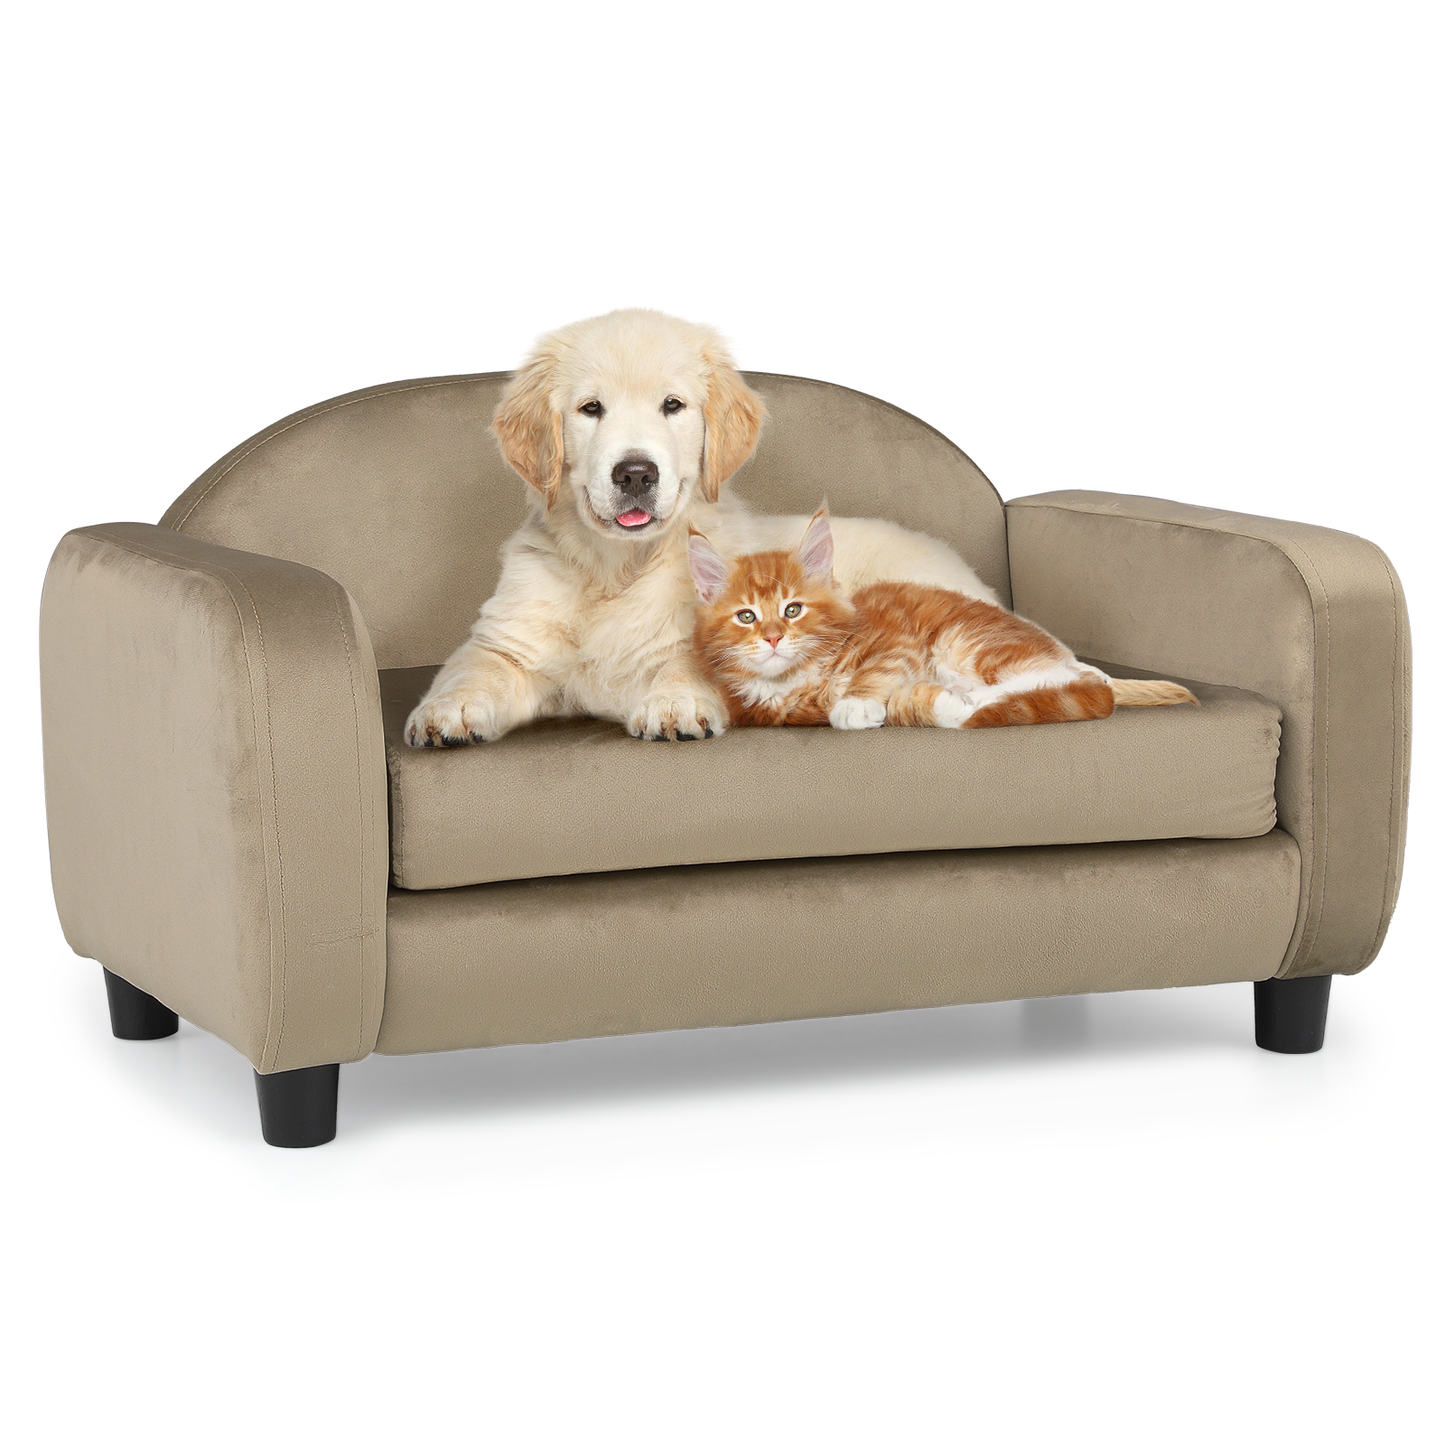 28" Length Pet Velvet Sofa Bed w/ Removable Washable Cushion